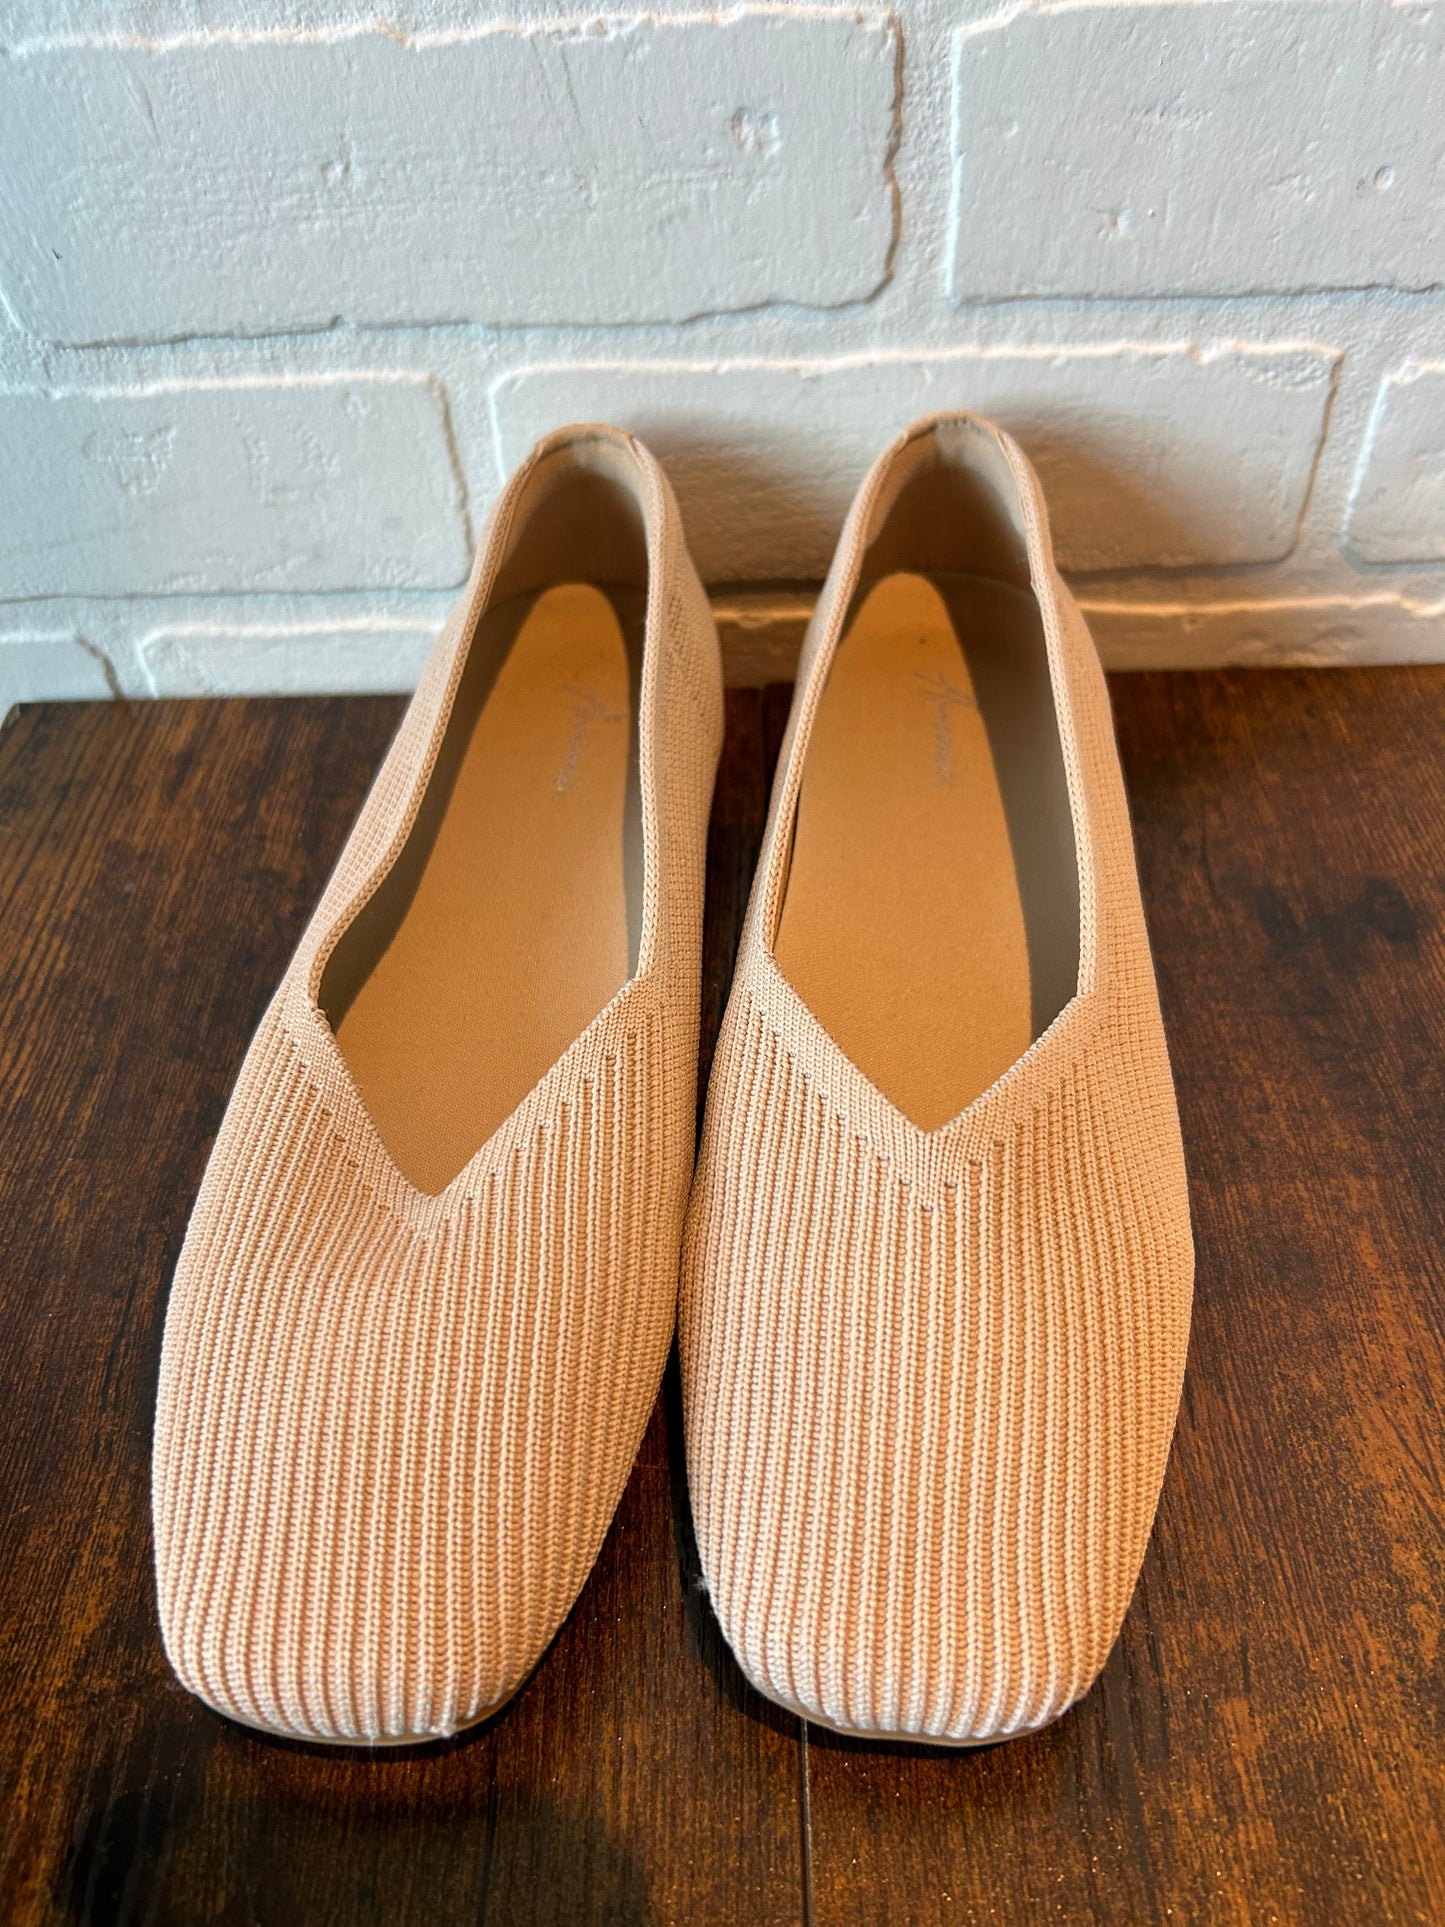 Tan Shoes Flats Arrowmic, Size 9